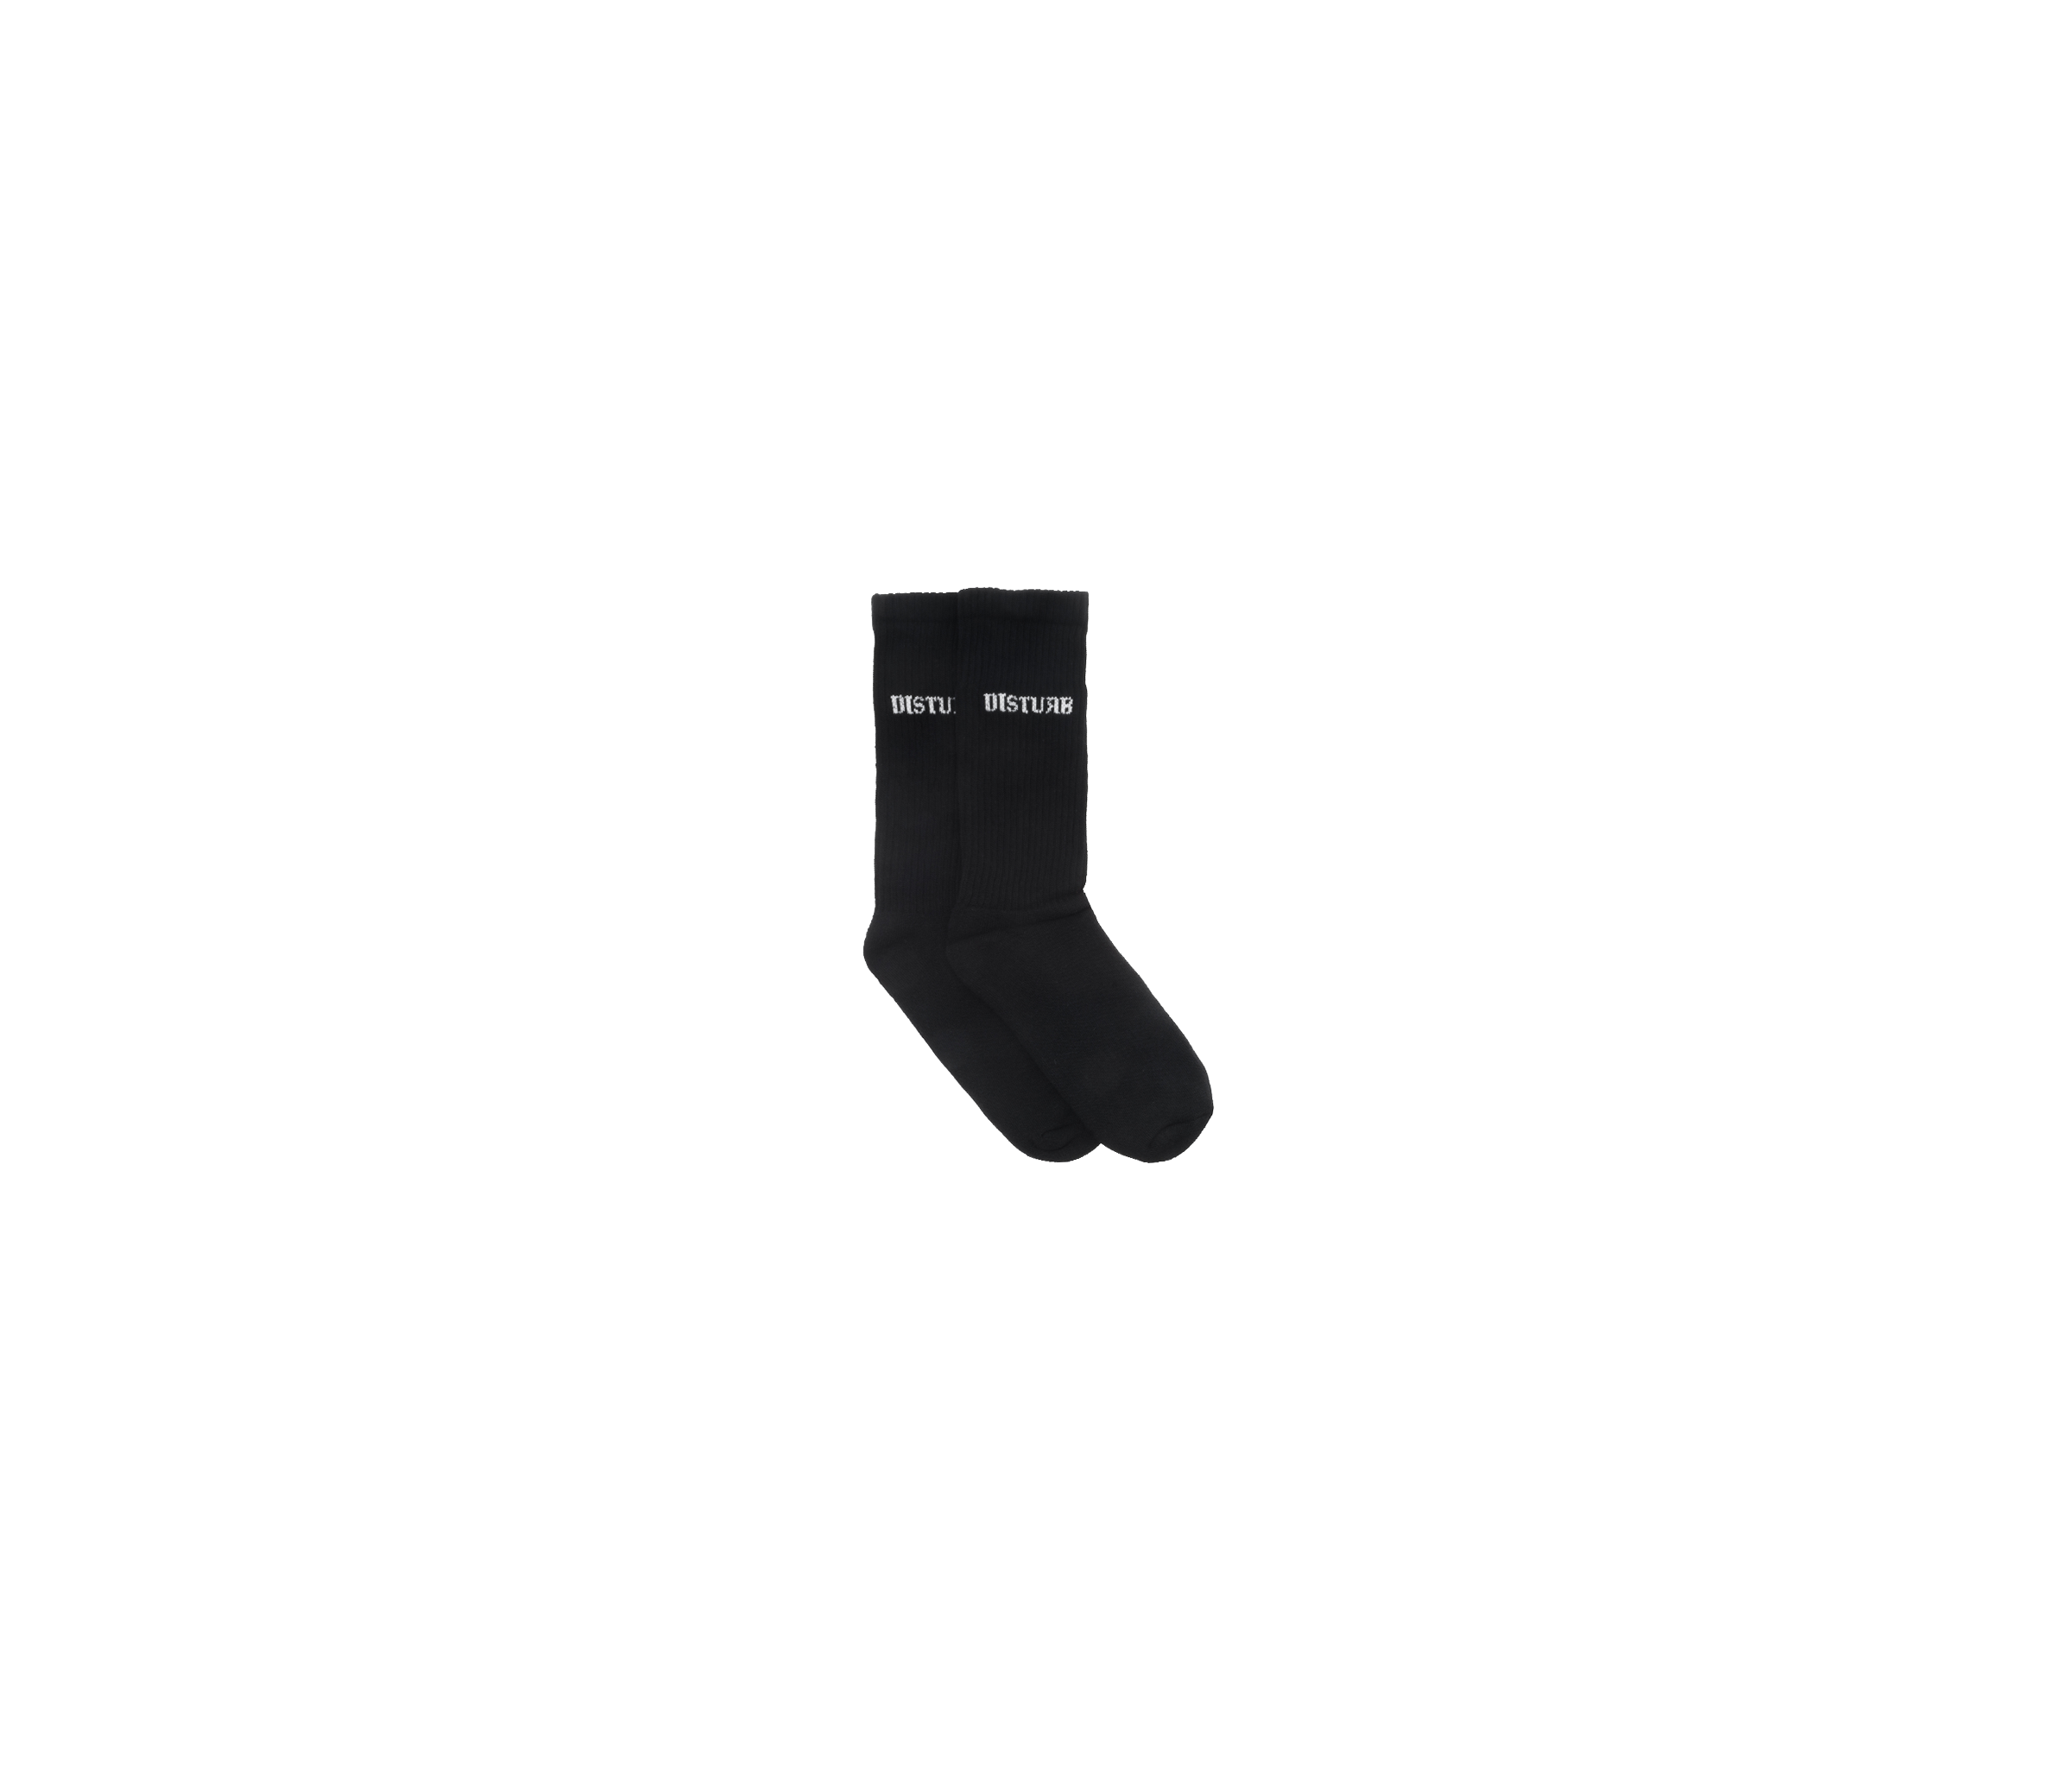 DISTURB - Socks Signature In Black